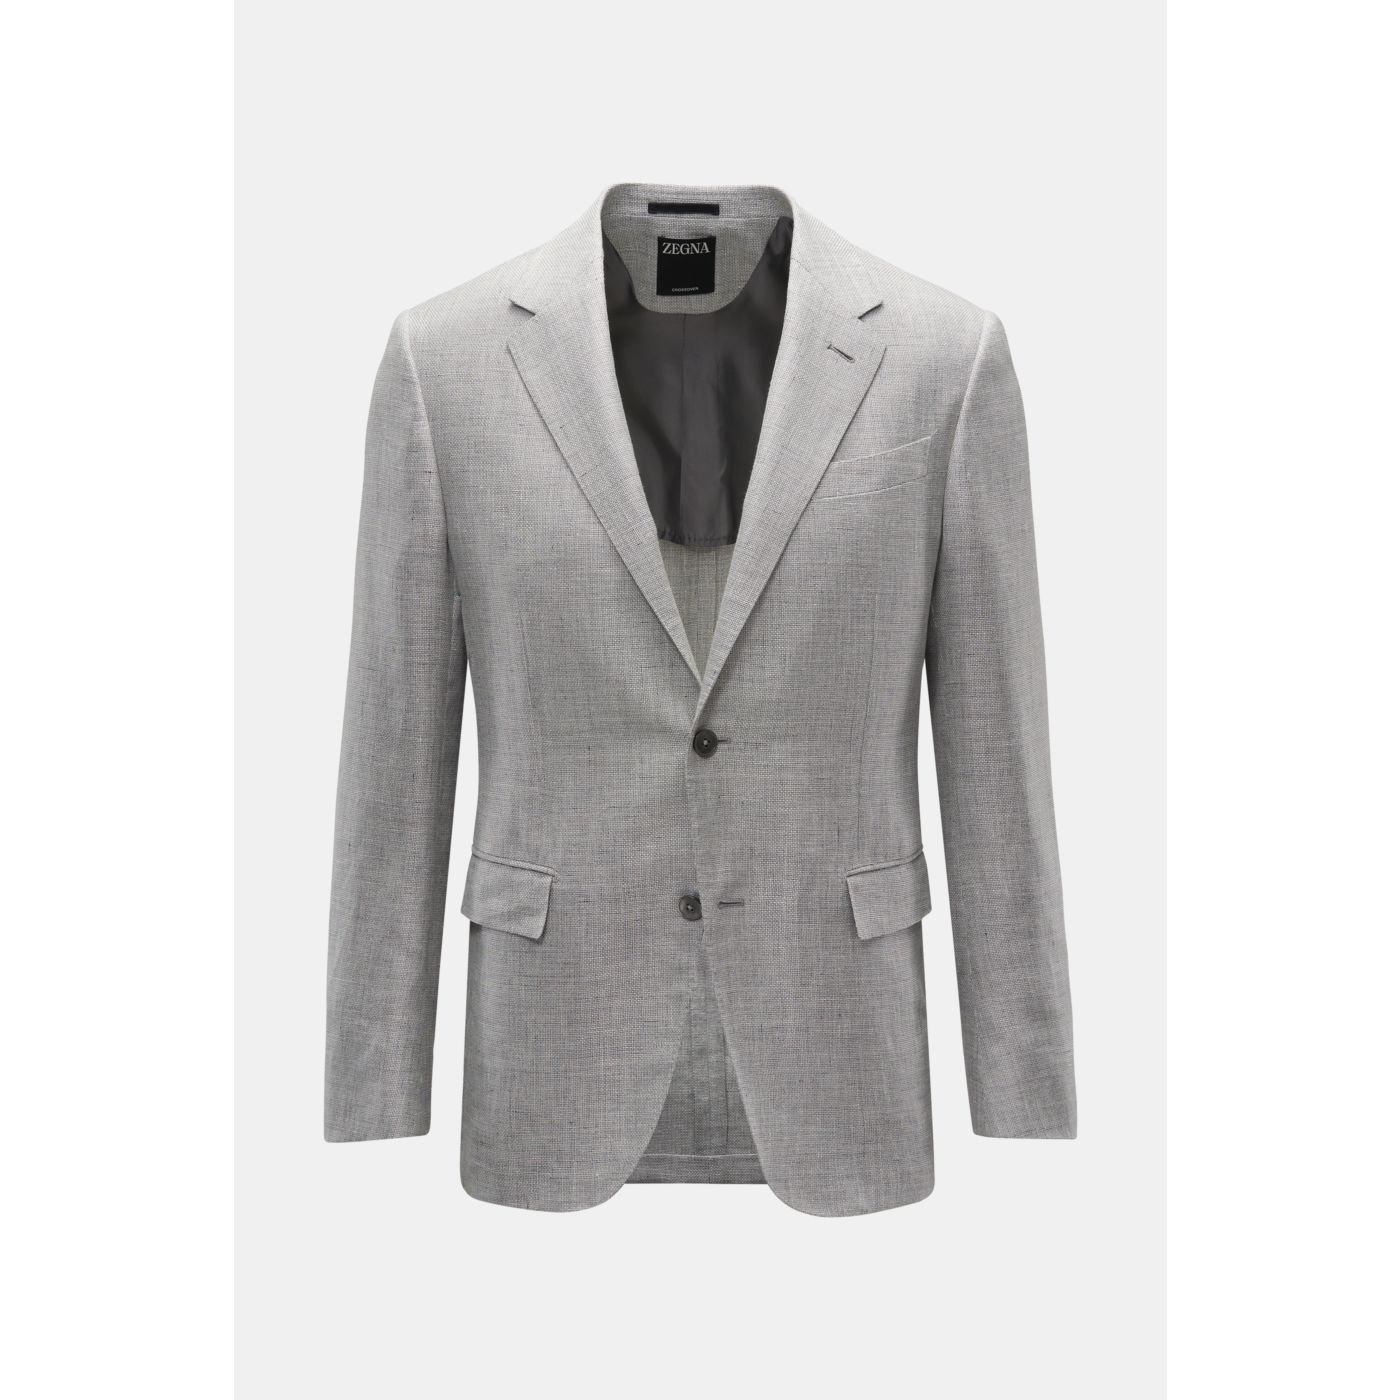 ZEGNA smart-casual jacket 'Crossover' light grey | BRAUN Hamburg